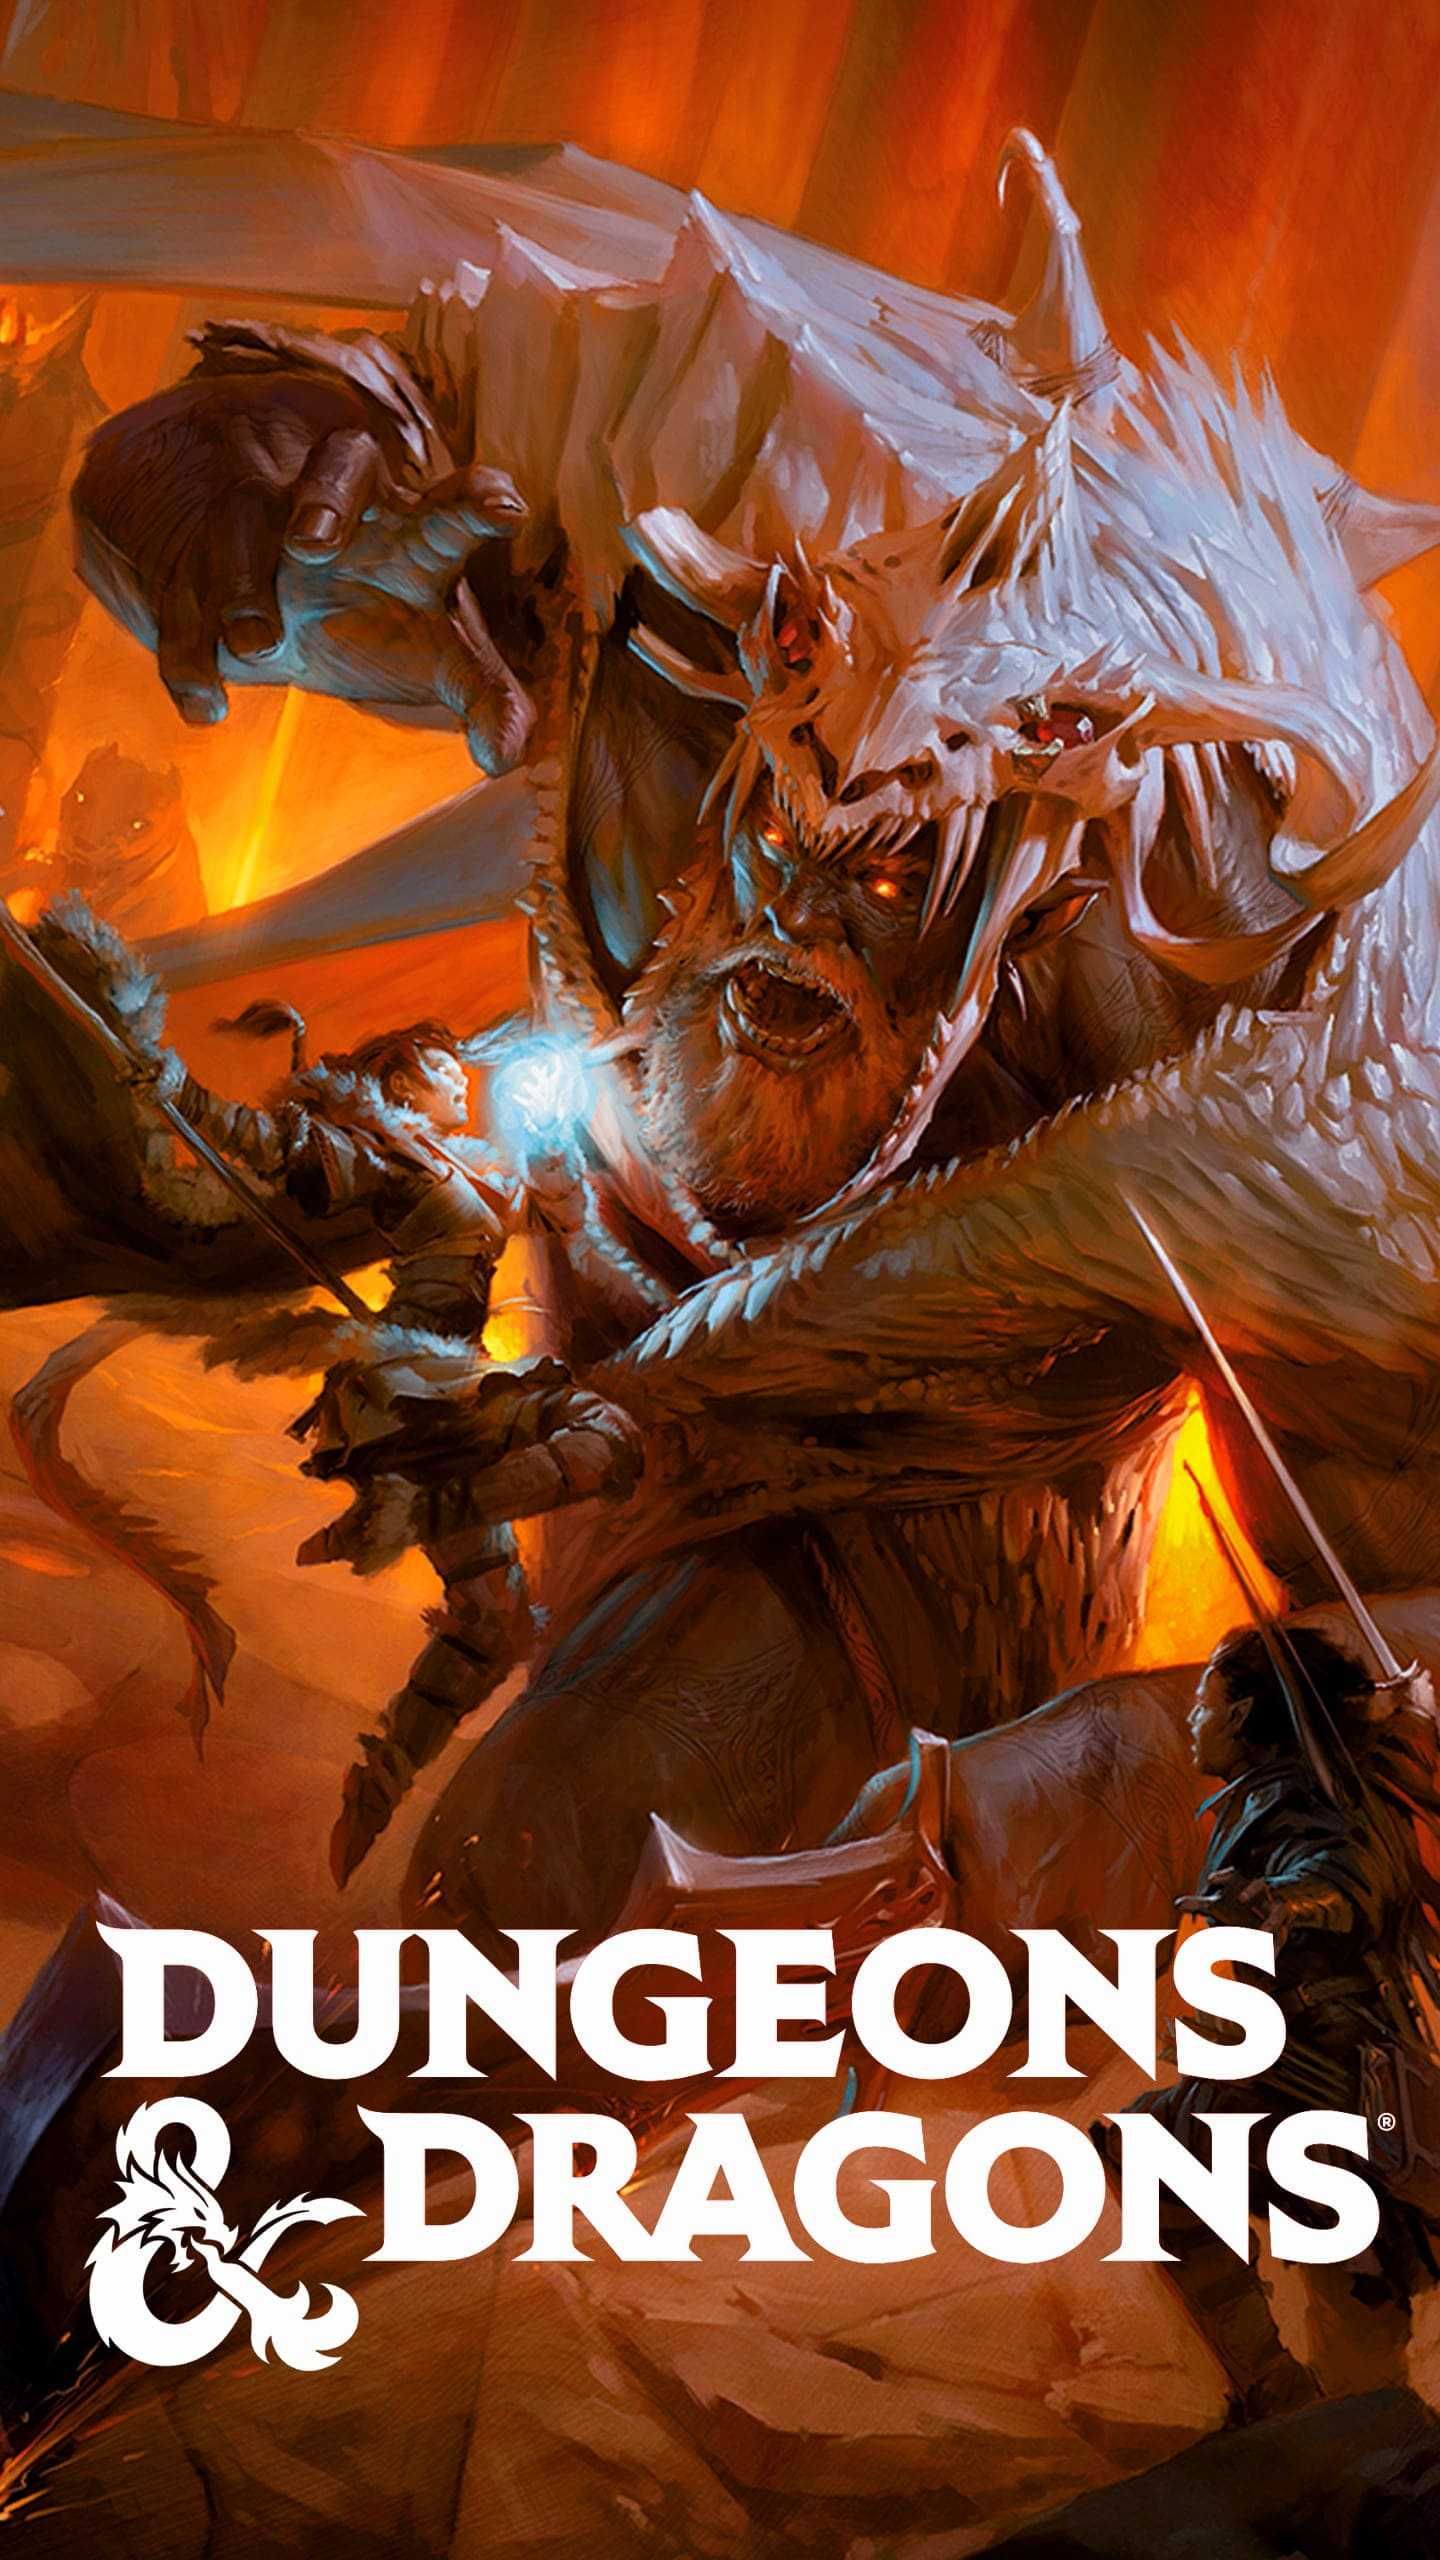 Dungeons & Dragons: i luoghi comuni da sfatare